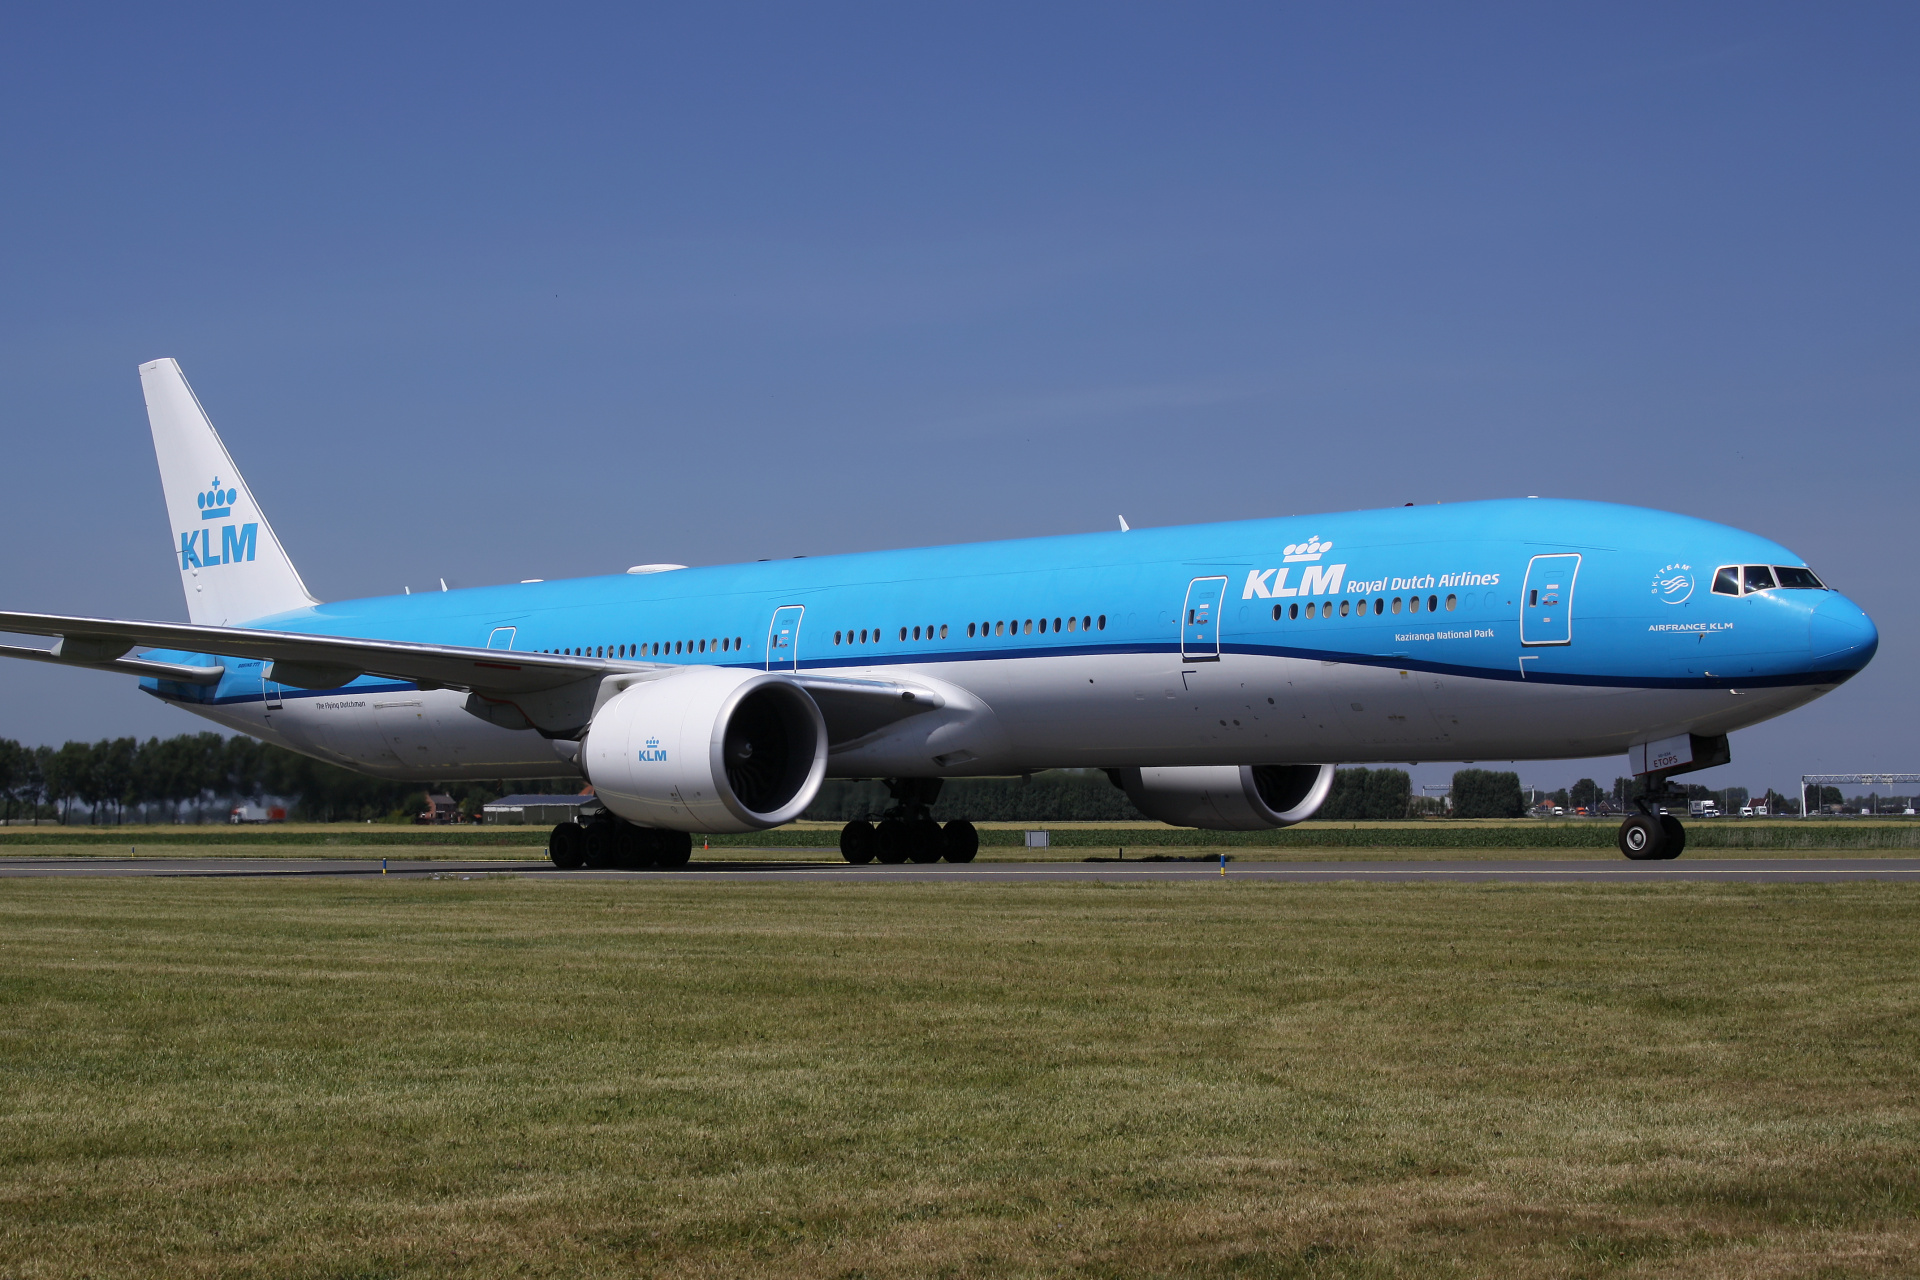 PH-BVO (Aircraft » Schiphol Spotting » Boeing 777-300ER » KLM Royal Dutch Airlines)